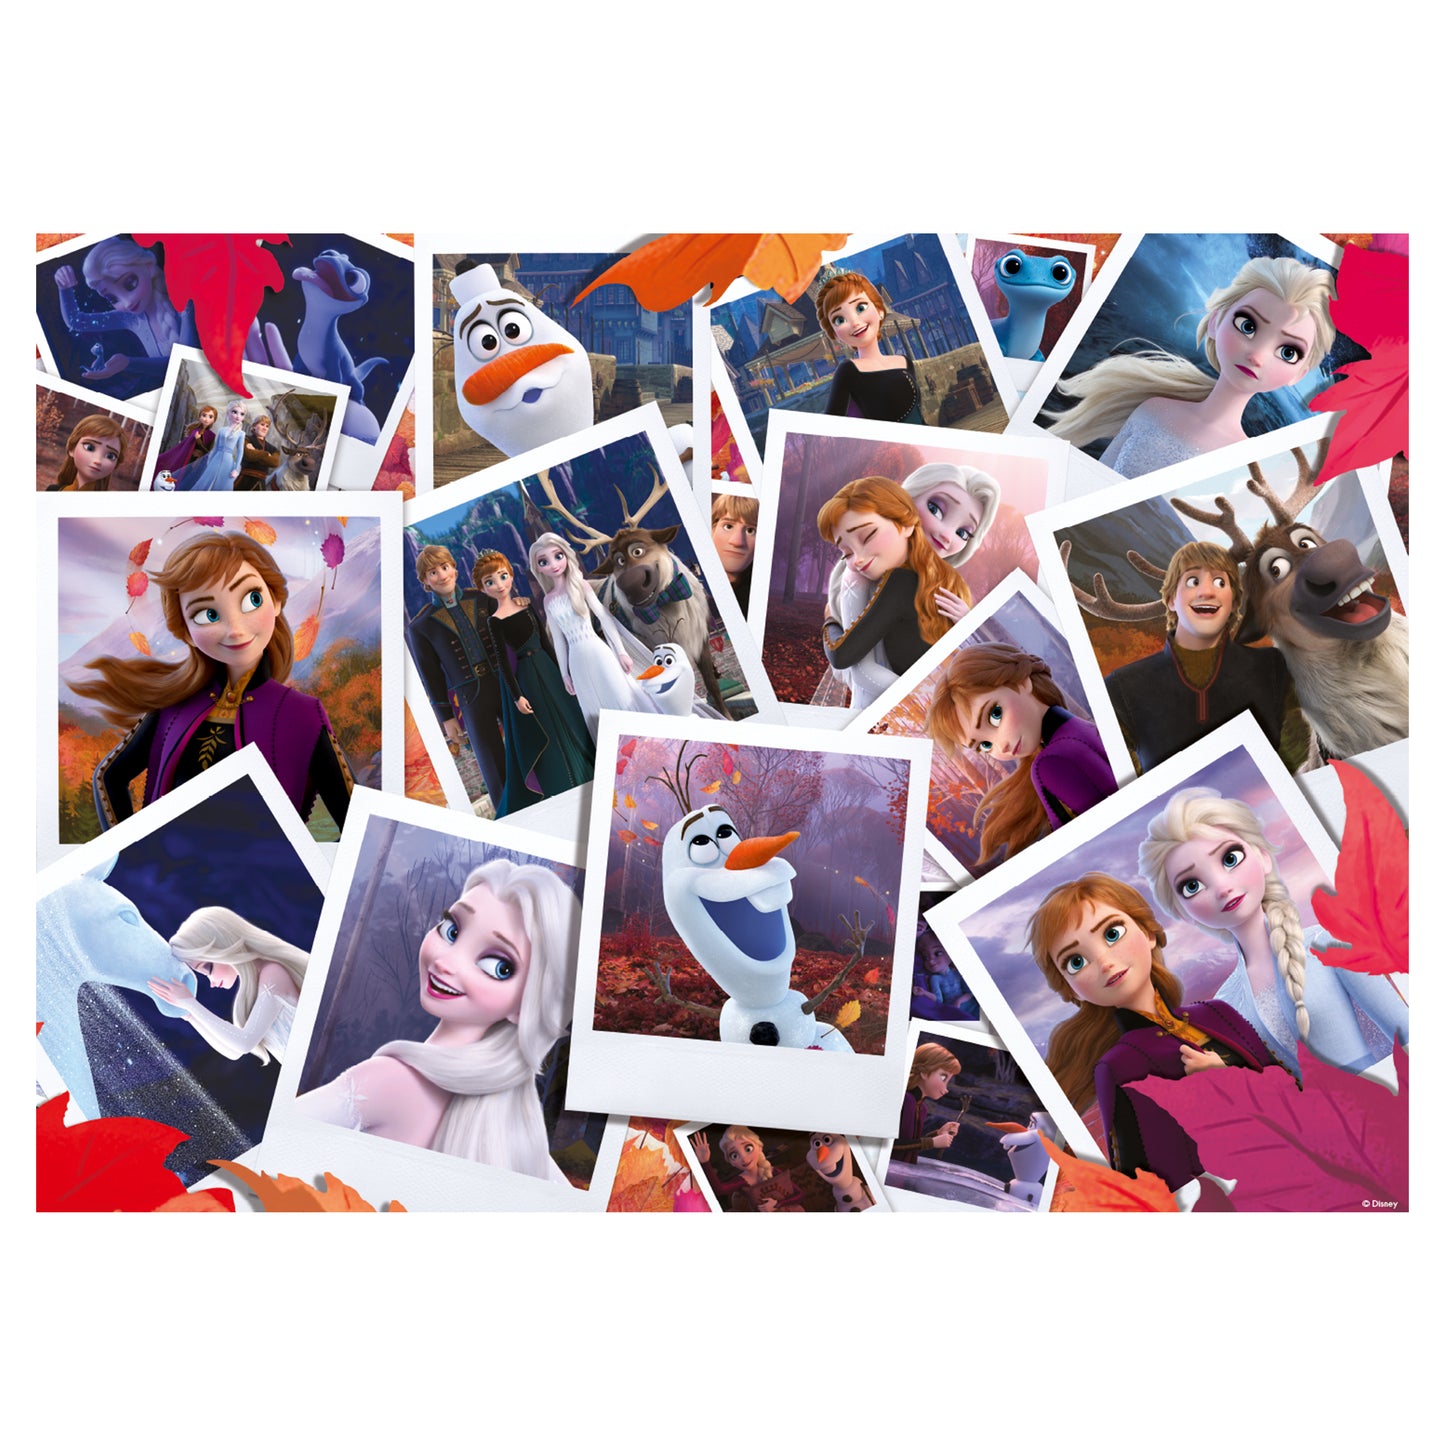 **Disney Pix Collection Frozen 2 1000pcs - product image - Jumboplay.com